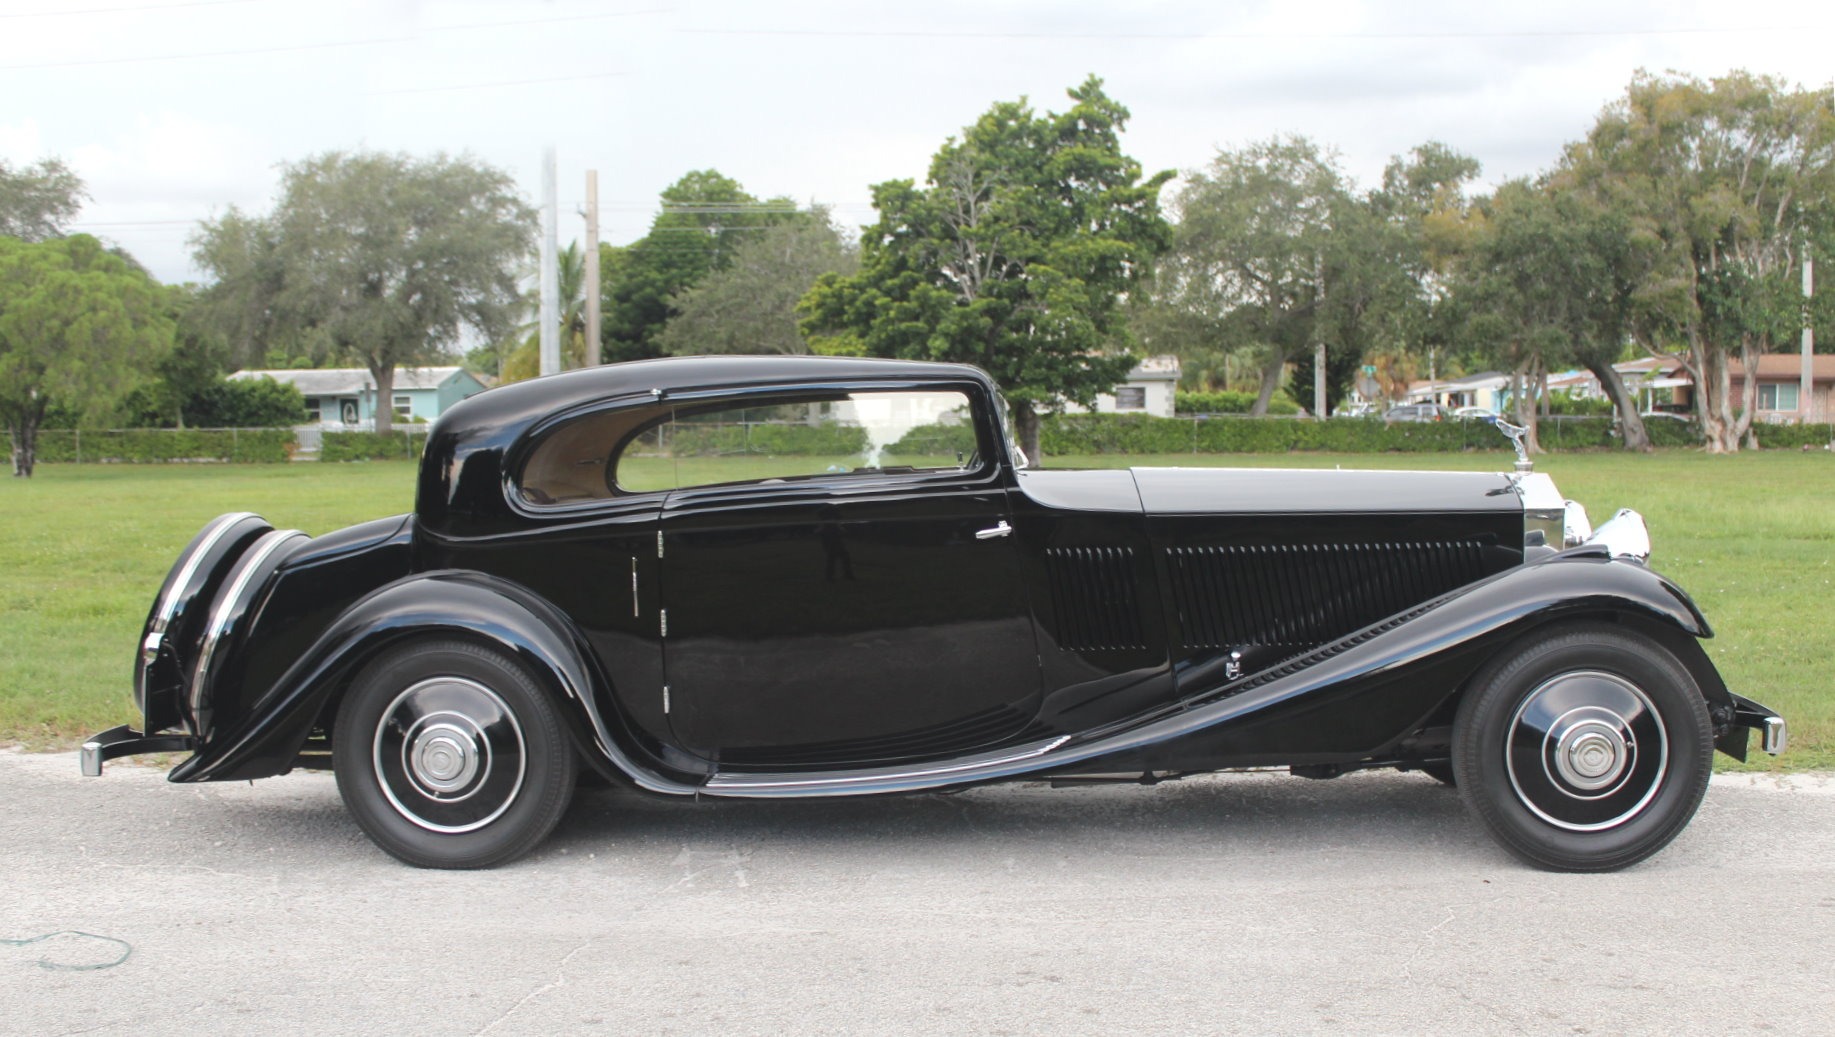 Used-1933-Rolls-Royce-Phantom-II-Continental-Short-Wheelbase-Touring-Coupe